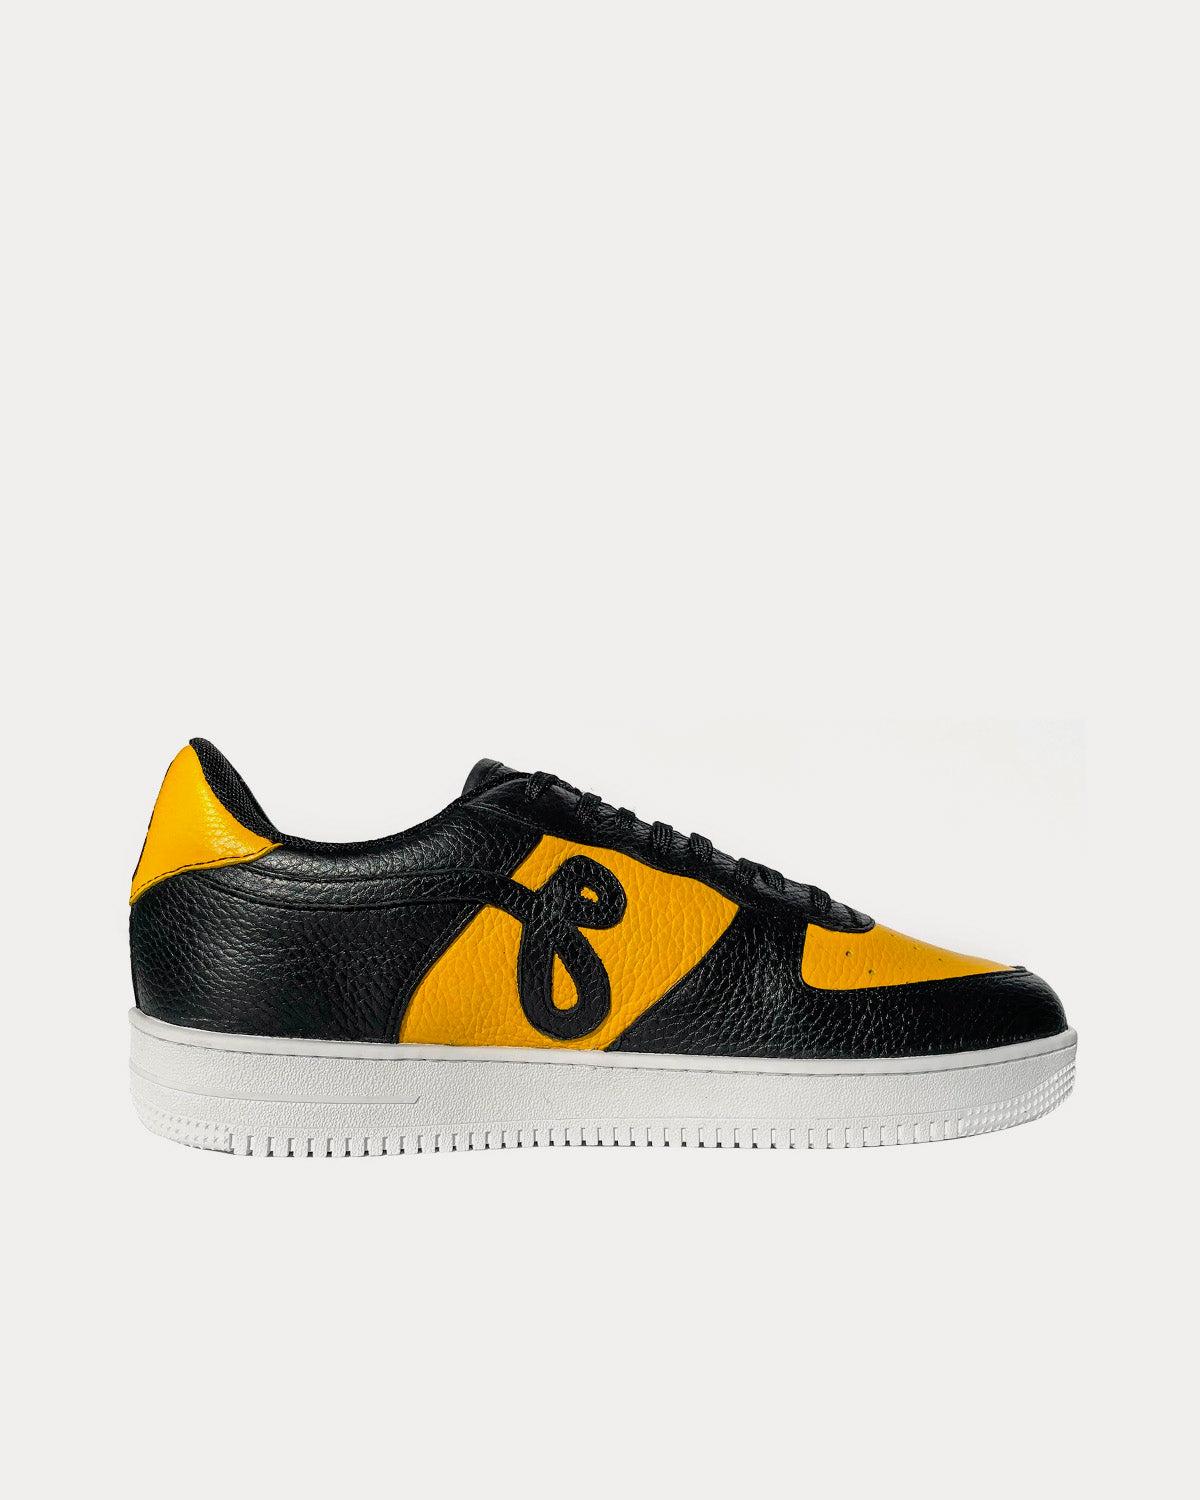 John Geiger - GF-01 Black / Yellow Low Top Sneakers